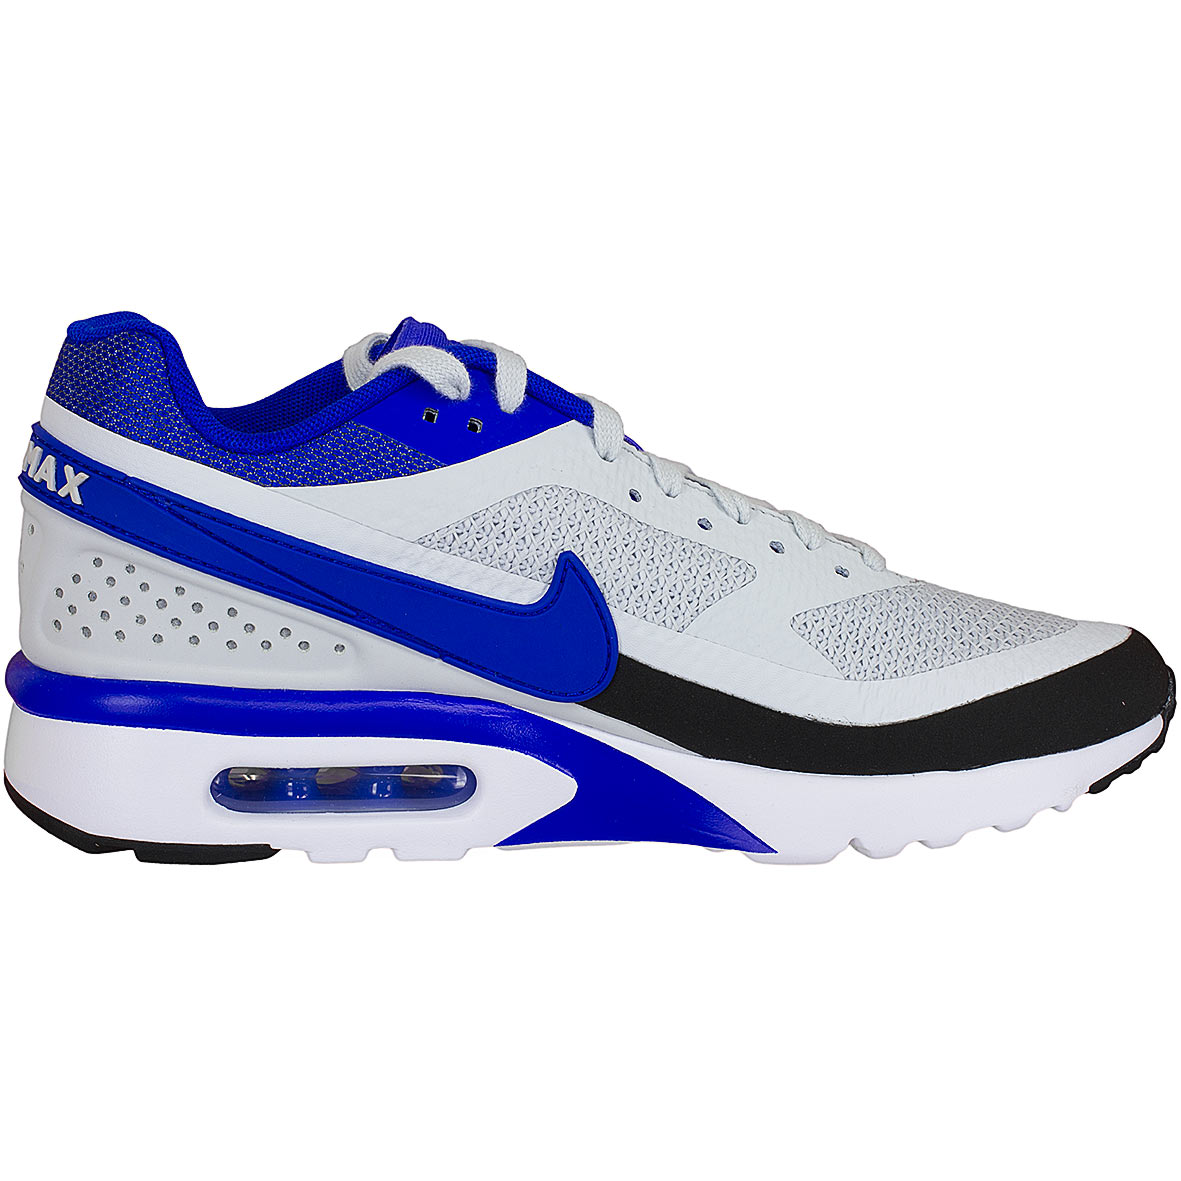 ☆ Nike Sneaker Air Max BW Ultra SE grau/blau - hier bestellen!